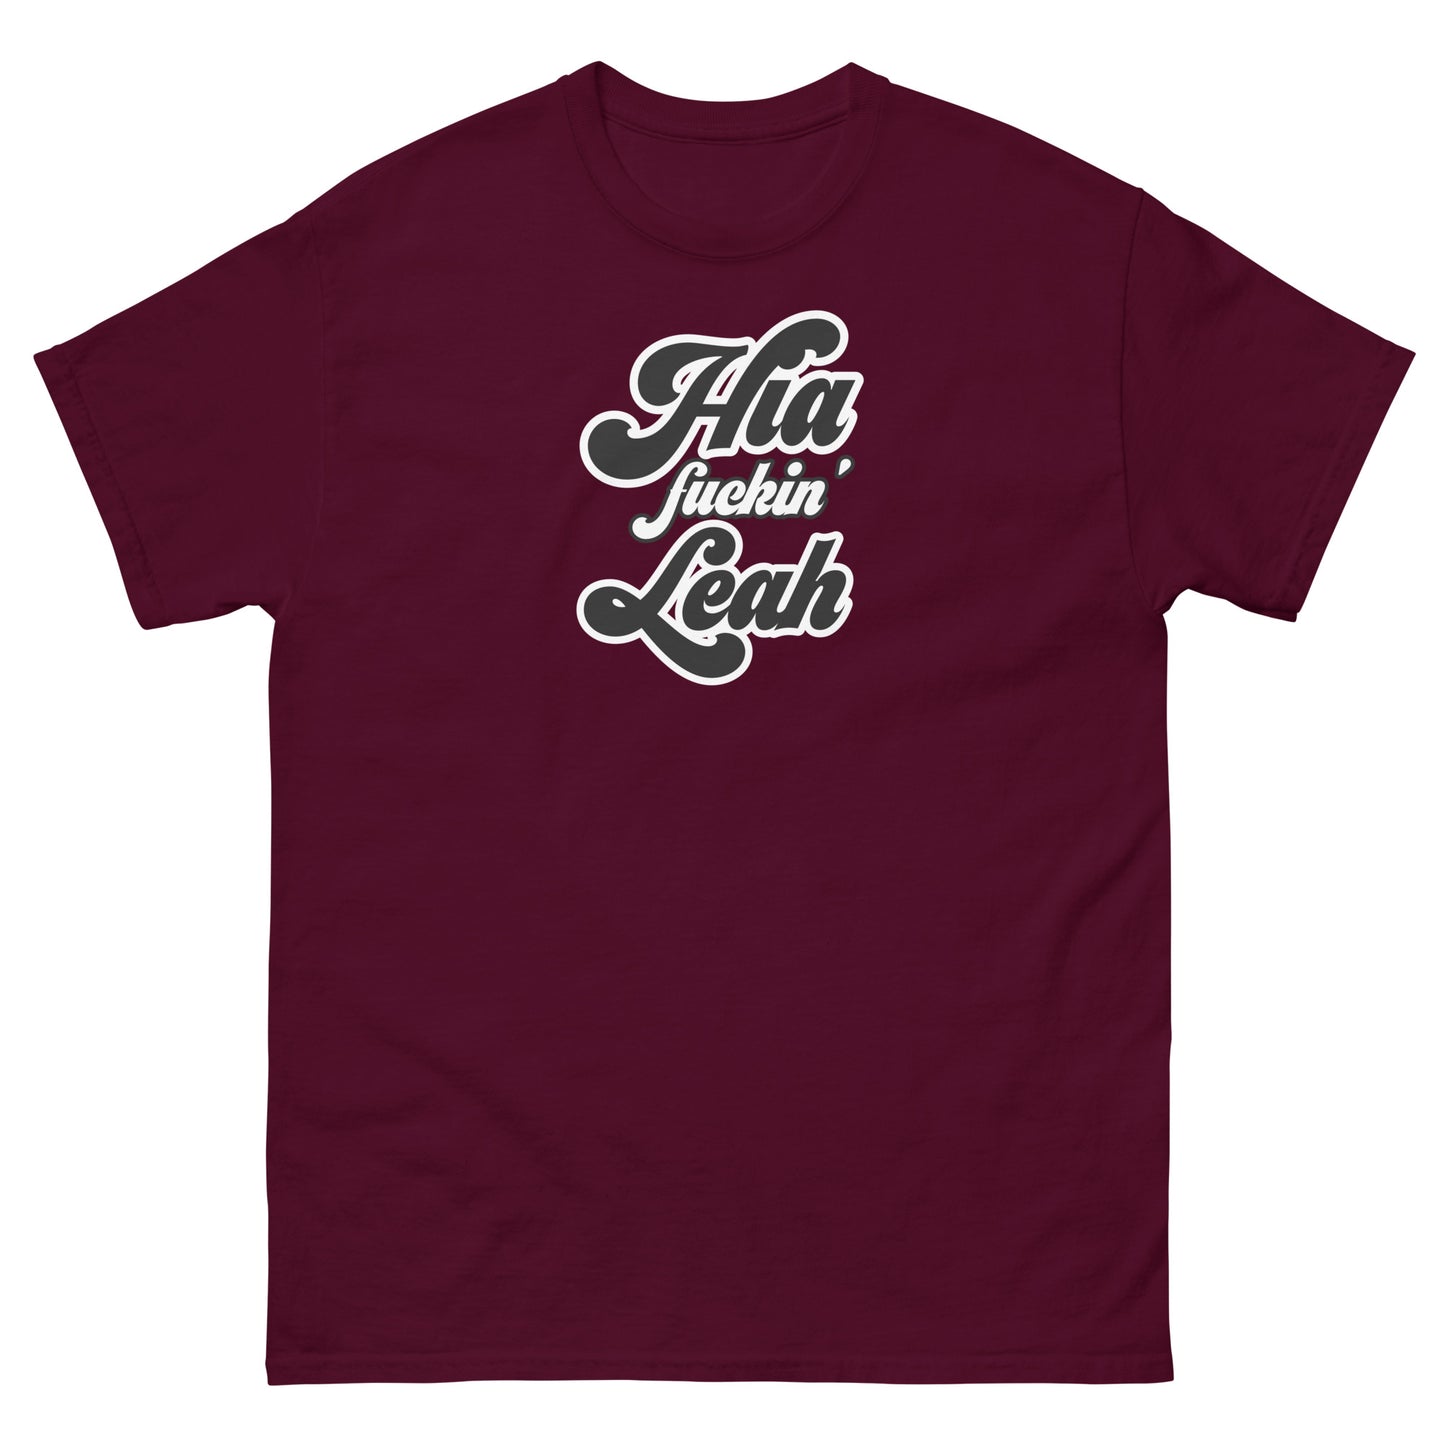 Men's Graphic Tee | Hia-F#-leah Men's Classic T-shirt